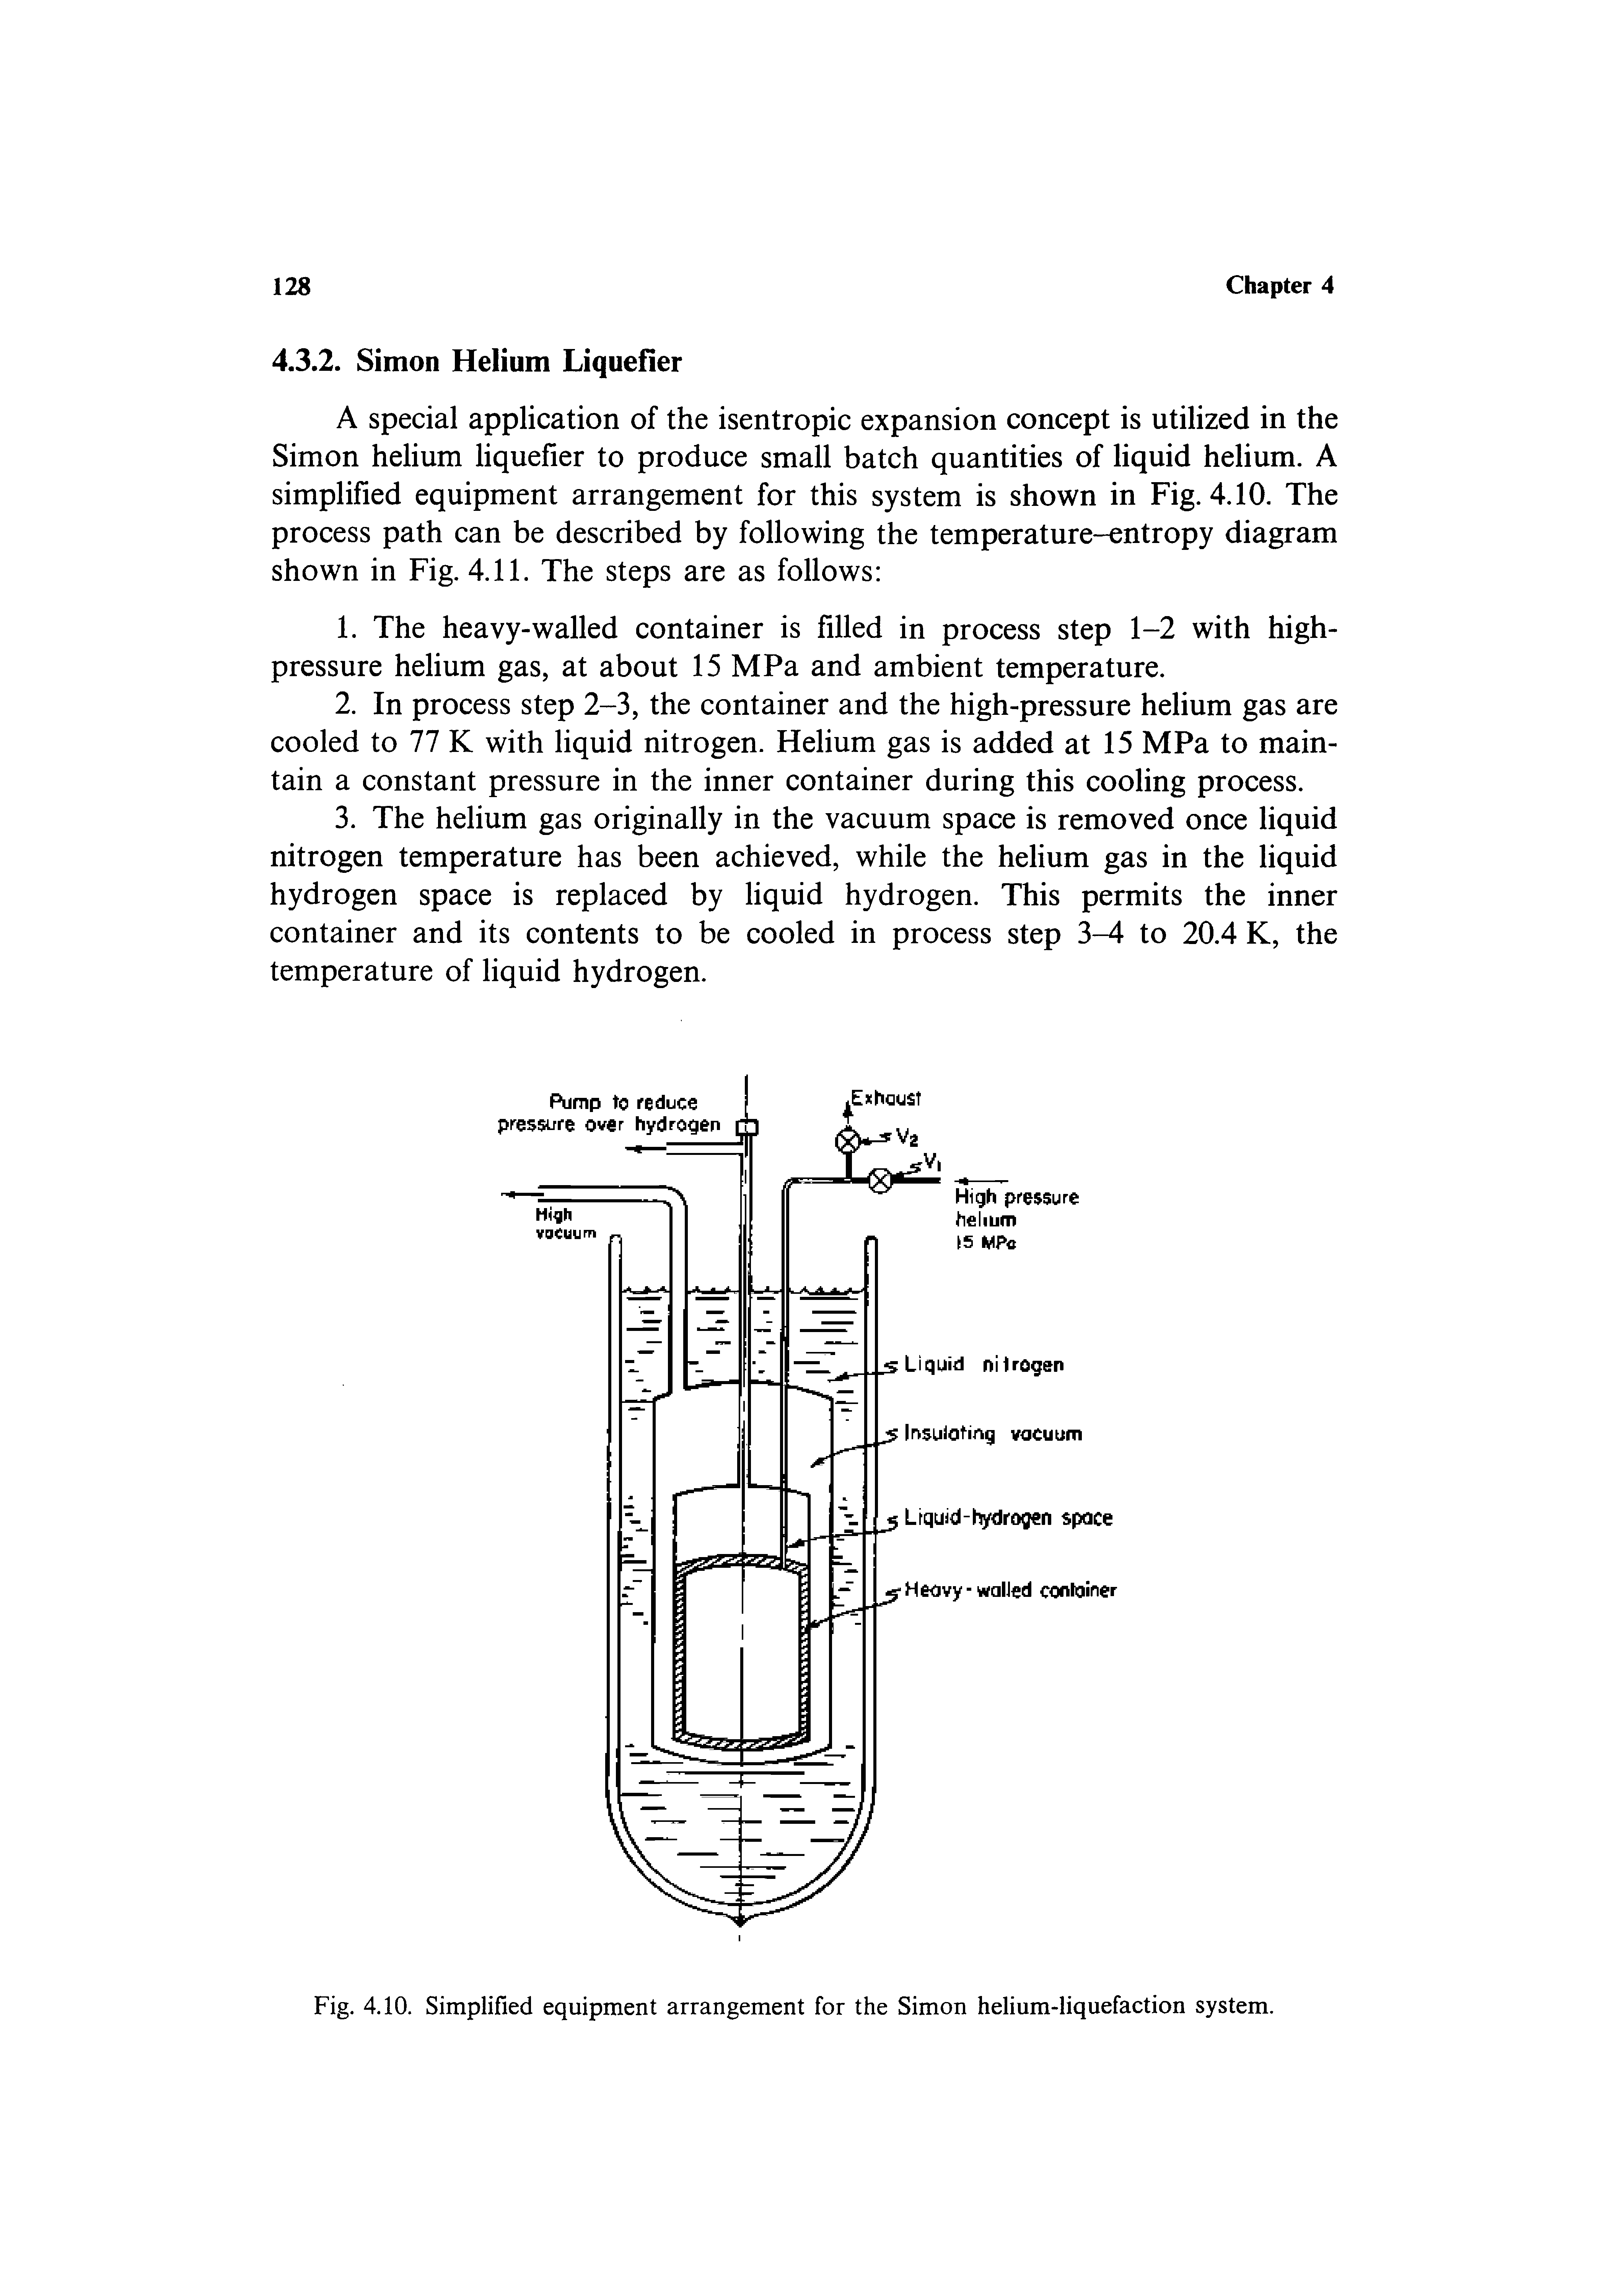 Fig. 4.10. Simplified equipment arrangement for the Simon helium-liquefaction system.